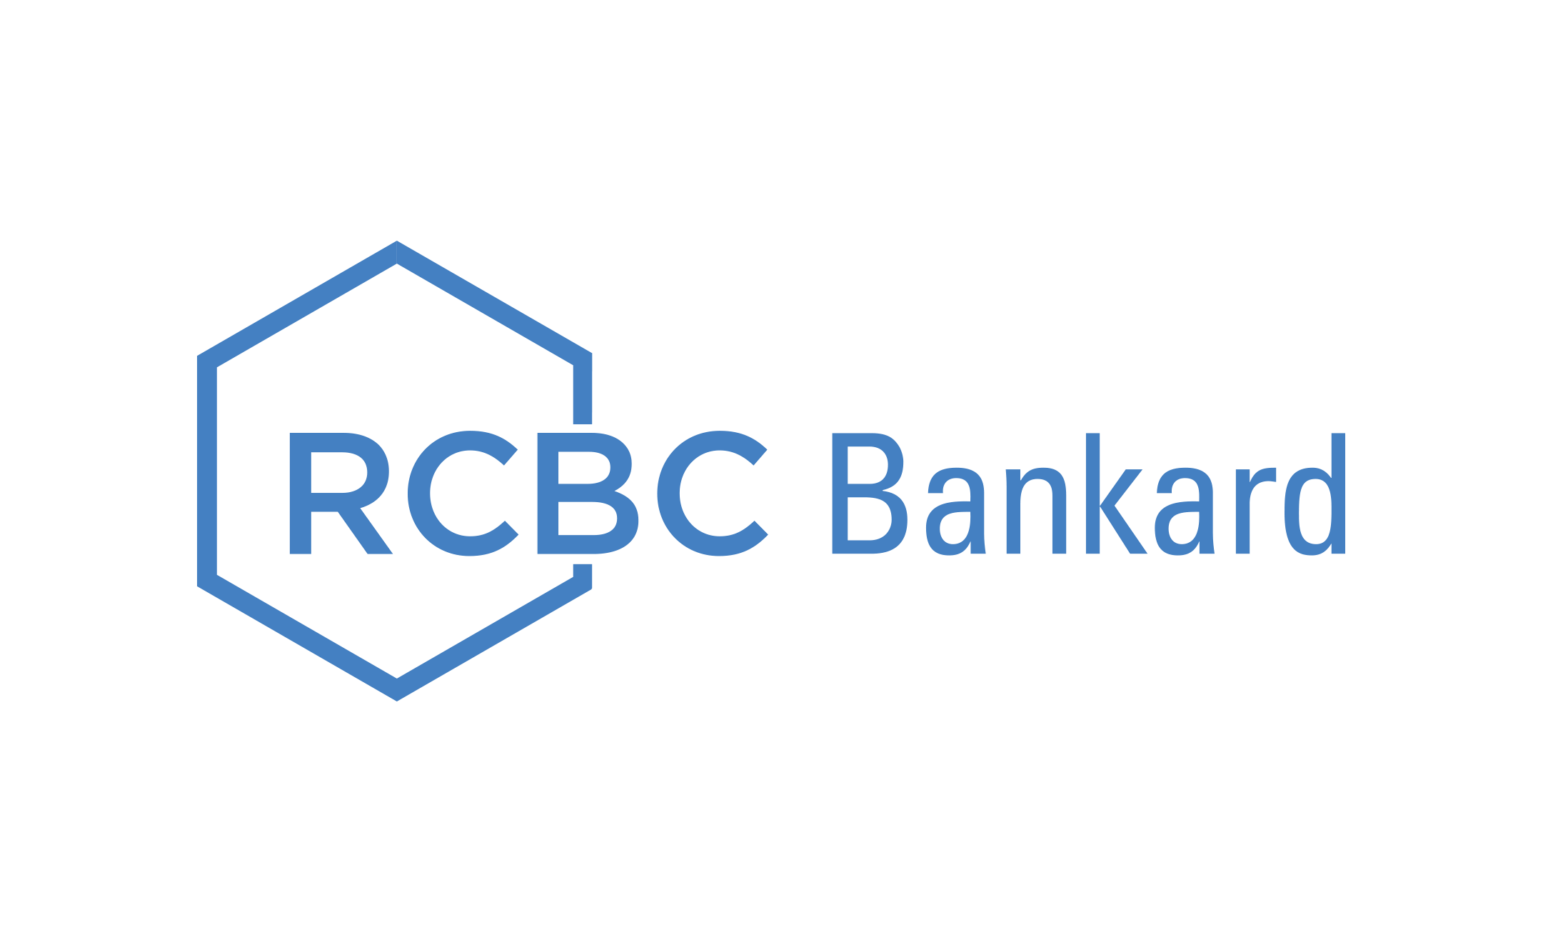 RCBC Bankard logo